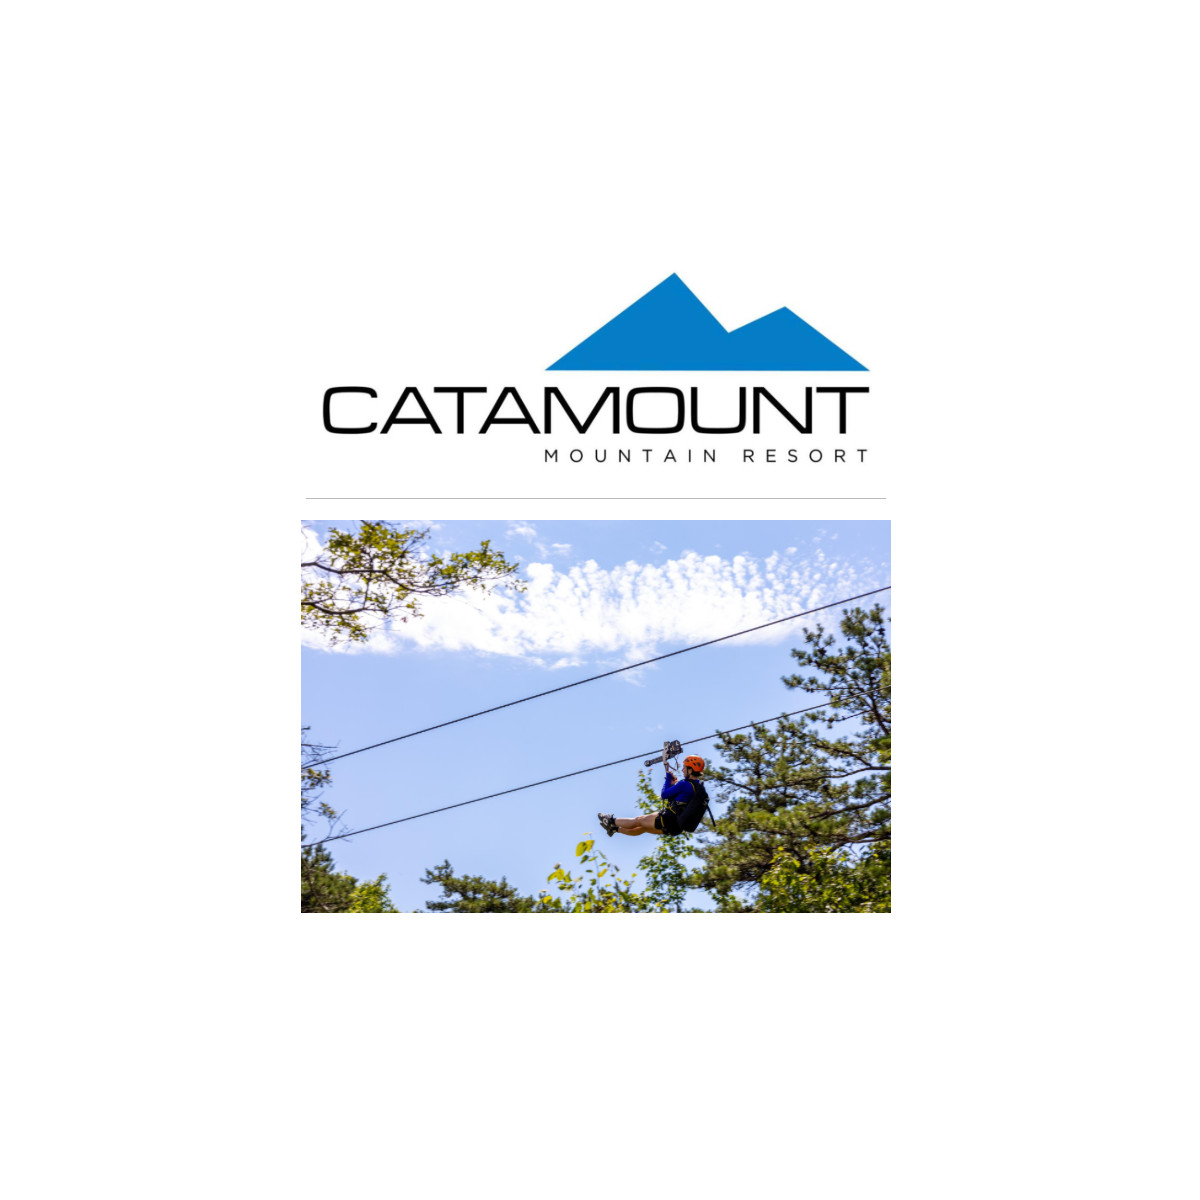 Catamount Logo and person on  zipline